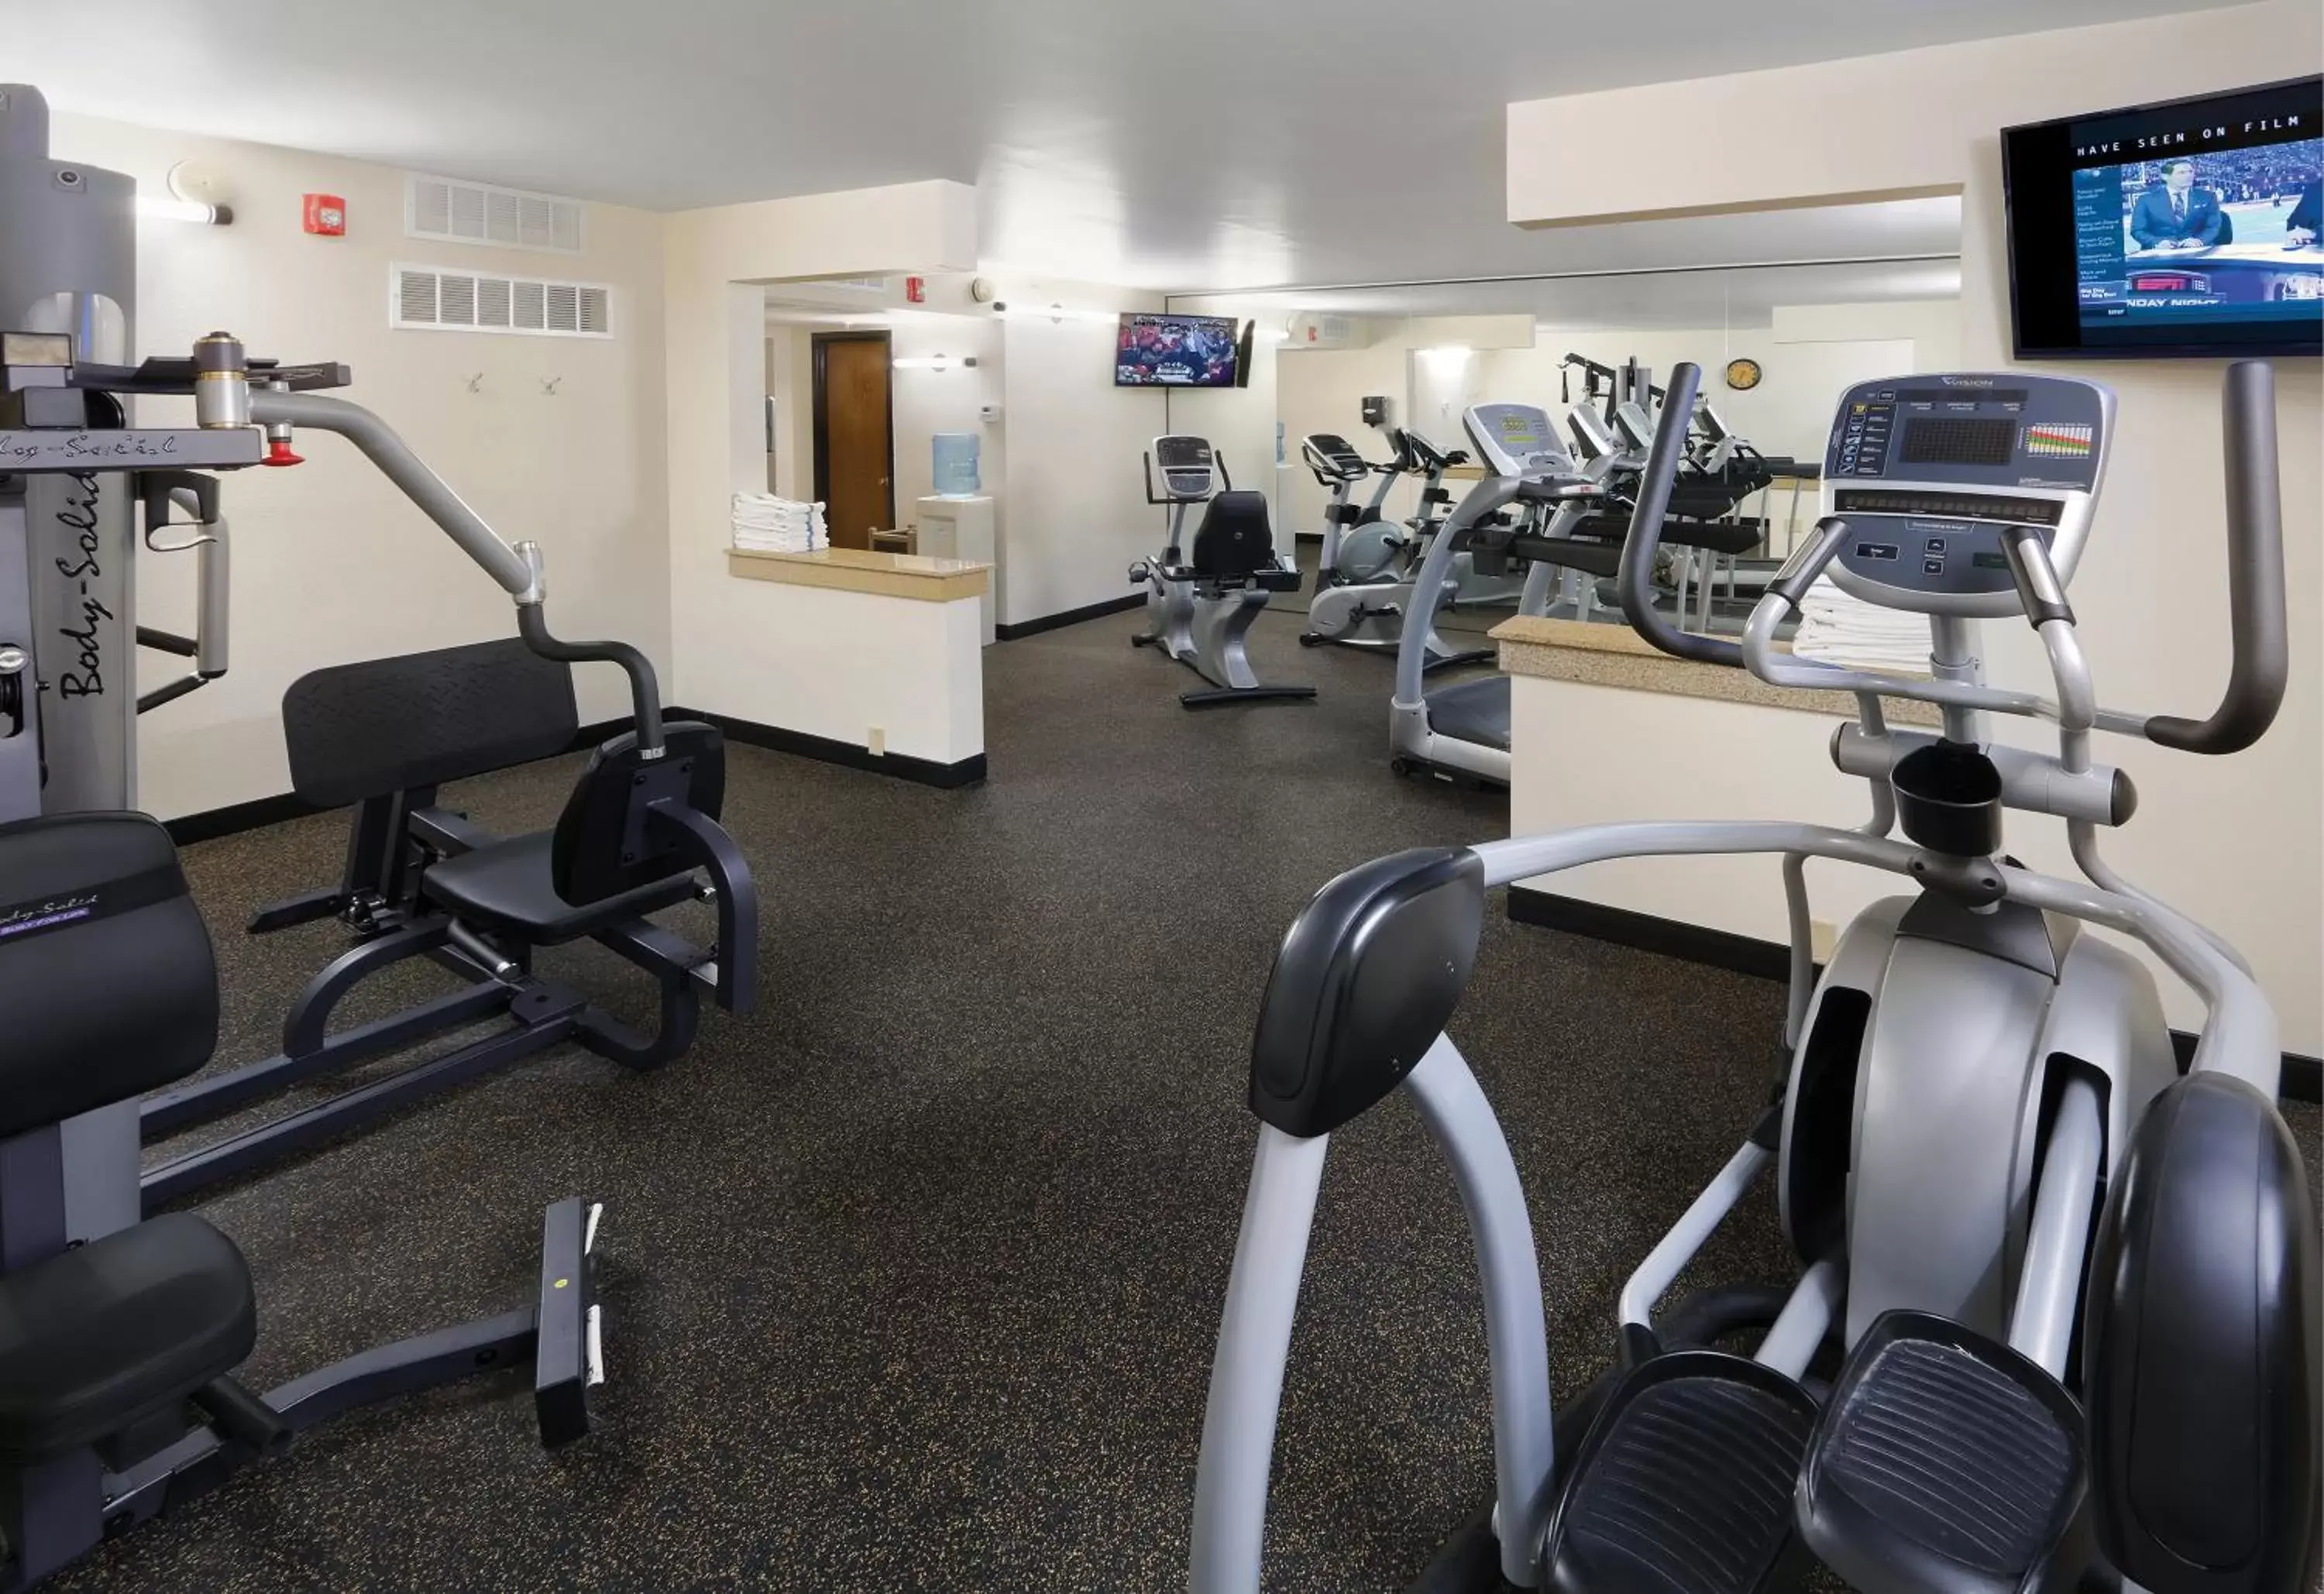 Fitness centre/facilities, Fitness Center/Facilities in Ramkota Hotel - Casper